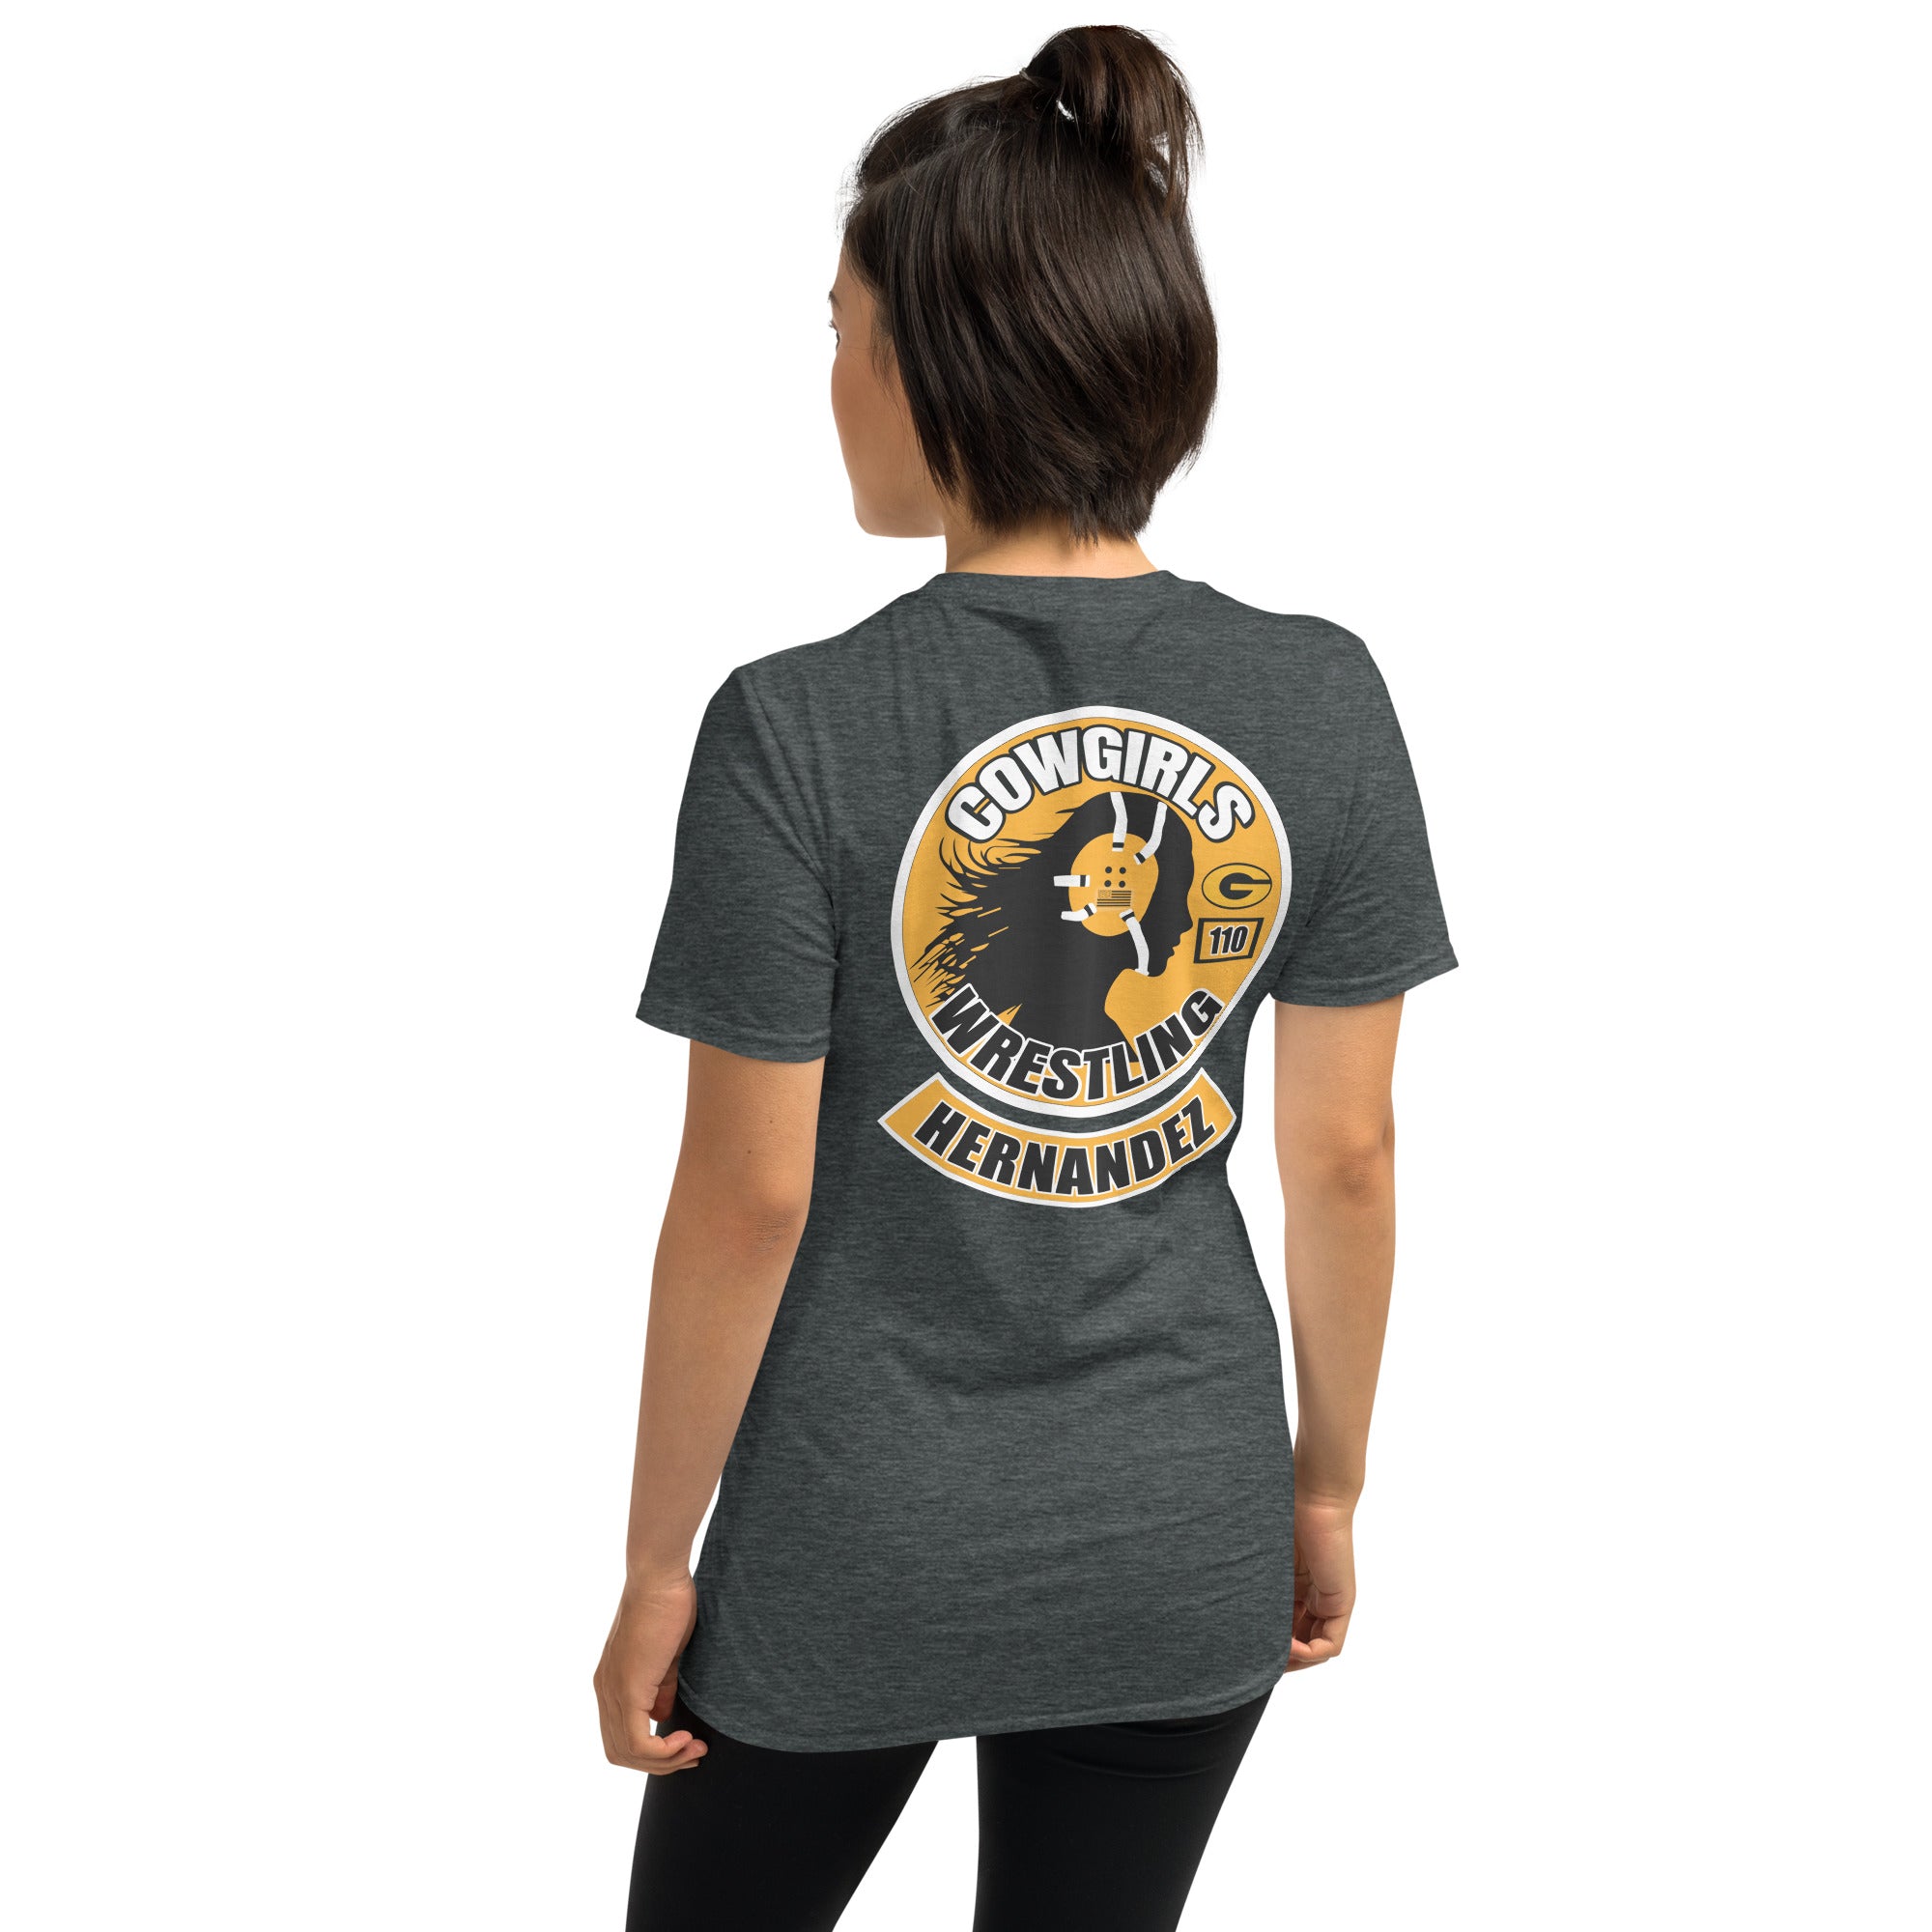 Goodland Cowgirls Wrestling Unisex T-Shirt